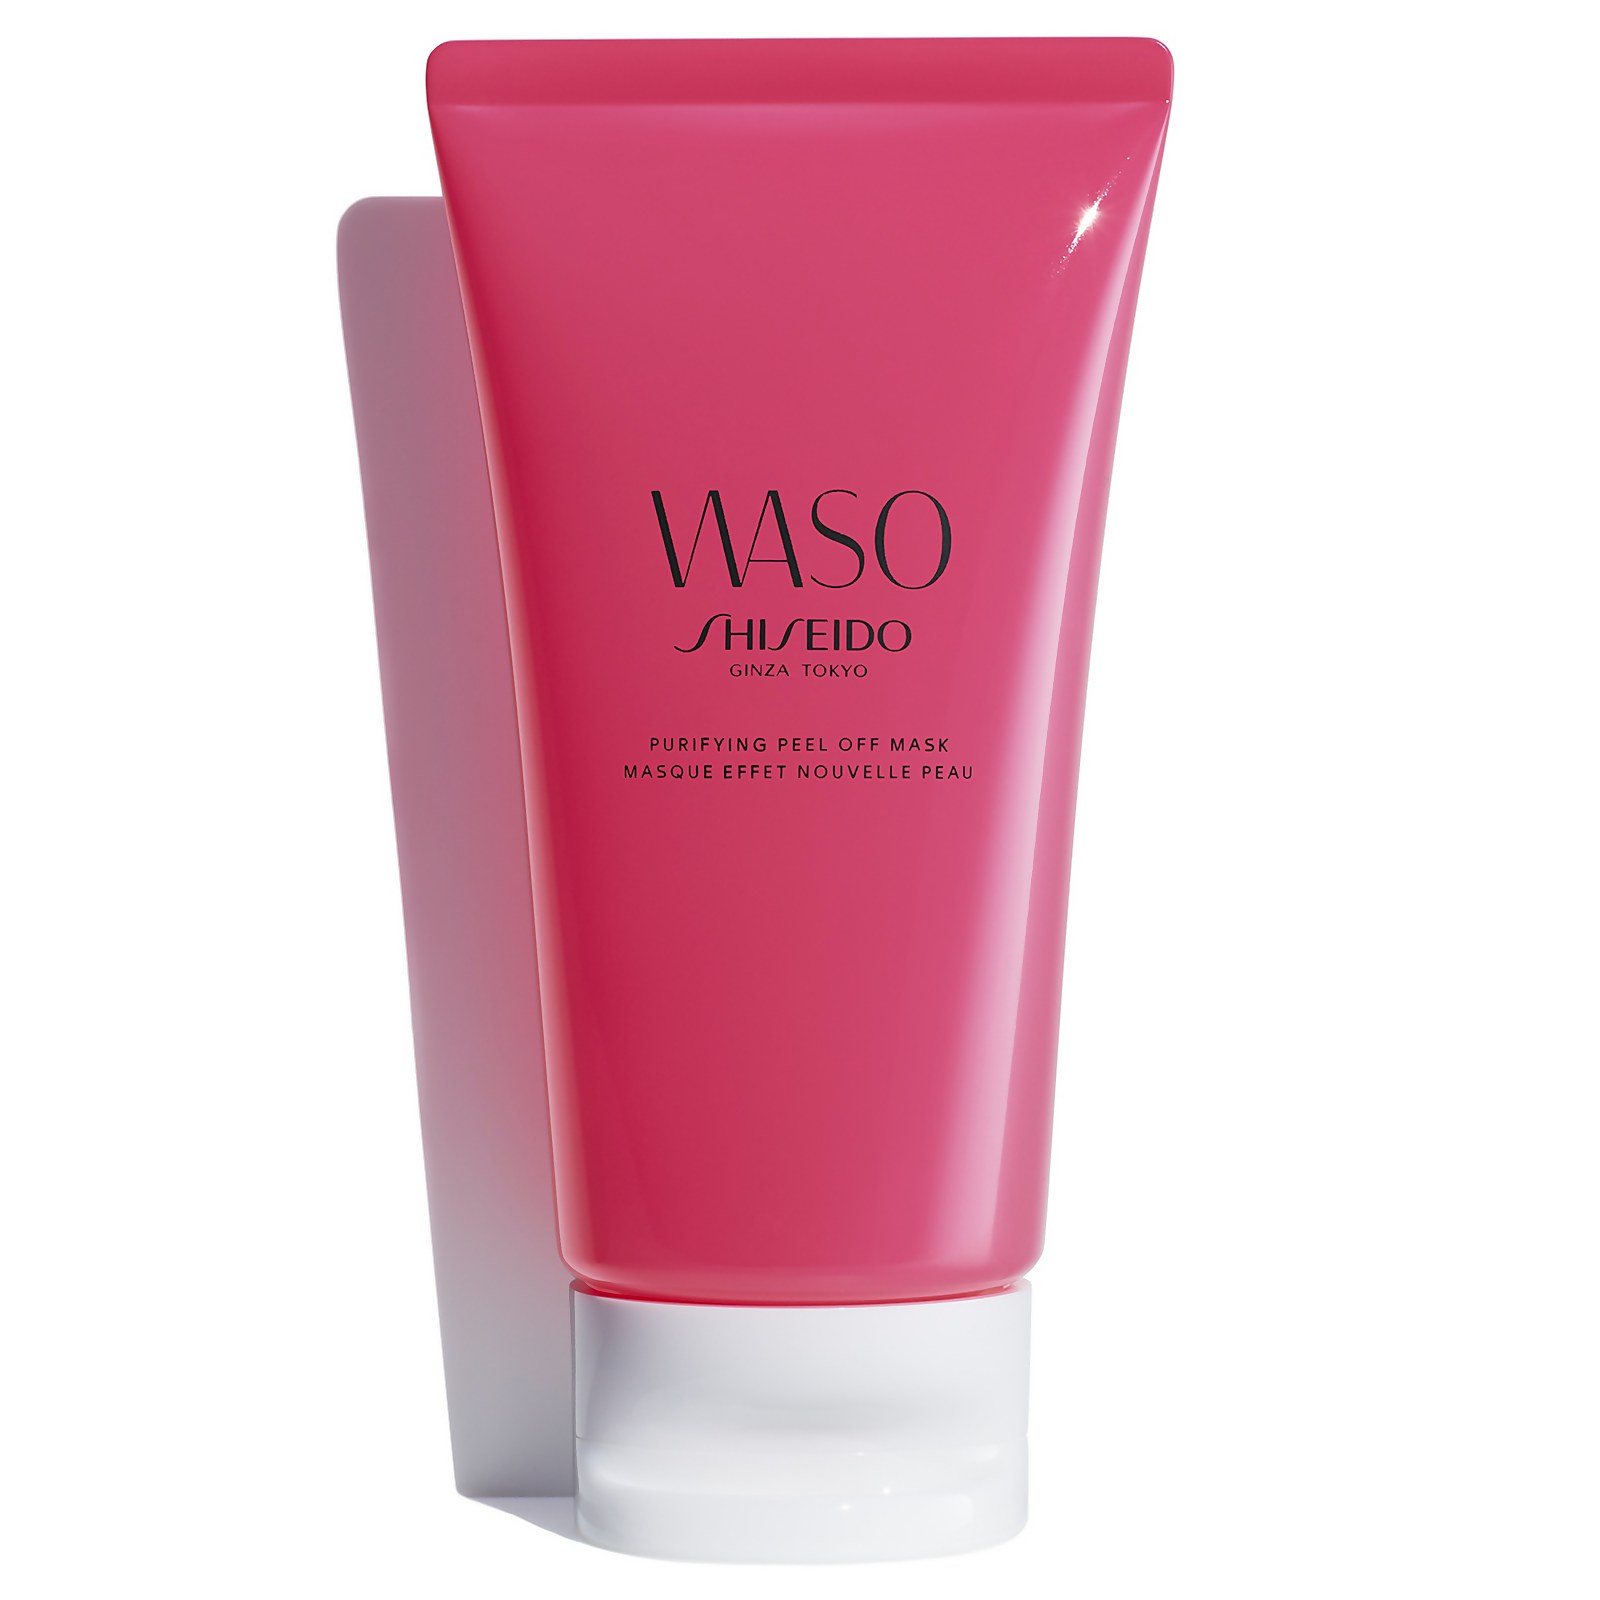 Shiseido WASO Purifying Peel Off Mask 100ml von Shiseido